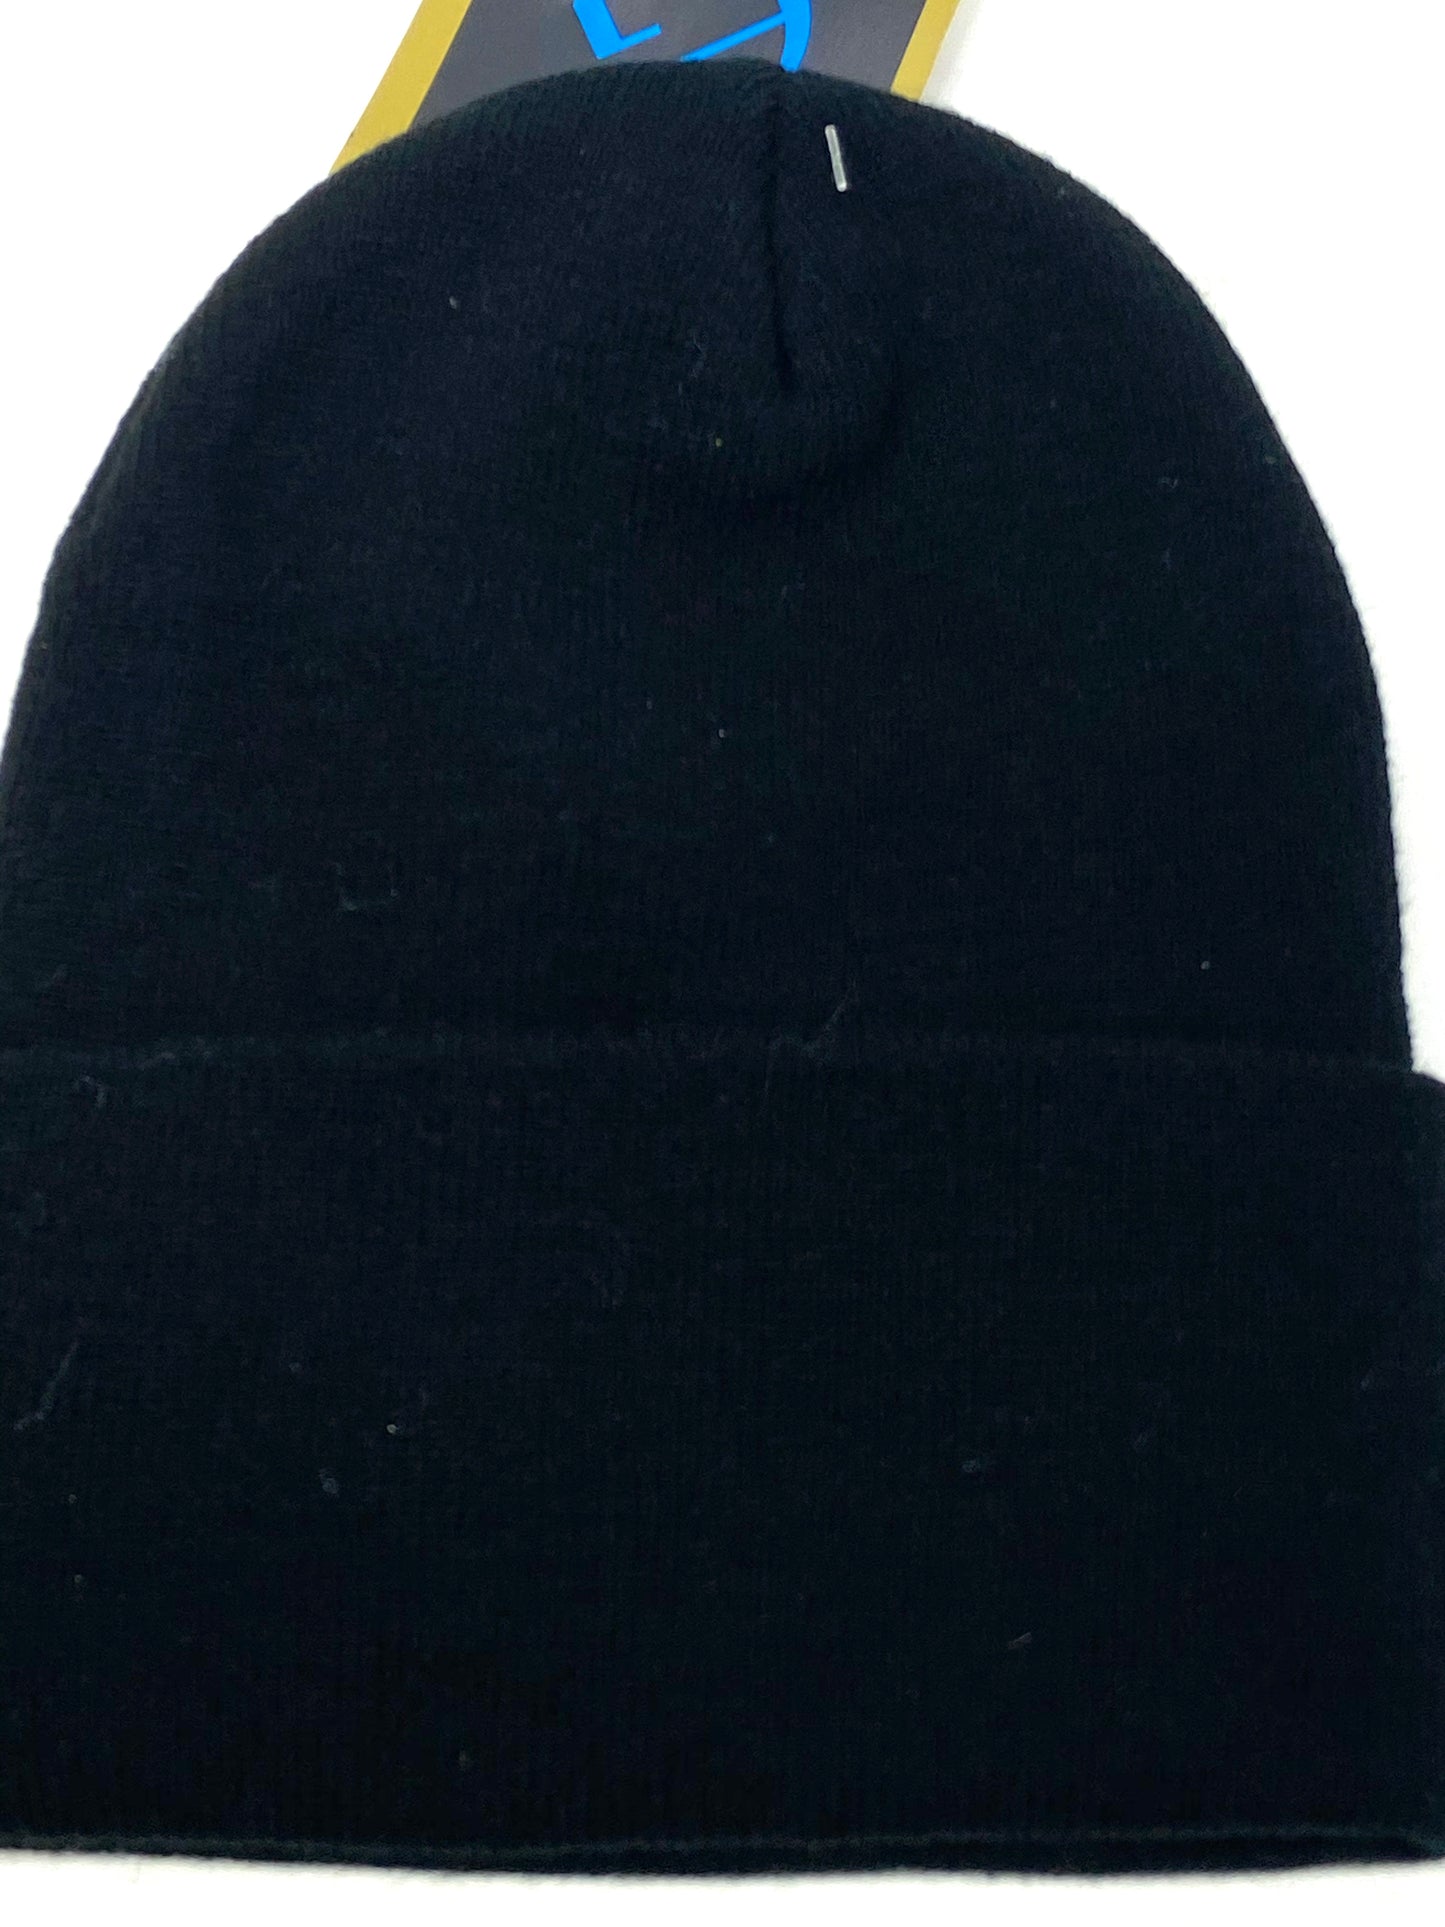 New York Jets Vintage NFL Black Cuffed Logo Knit Hat NOS By G Knit Cap Company